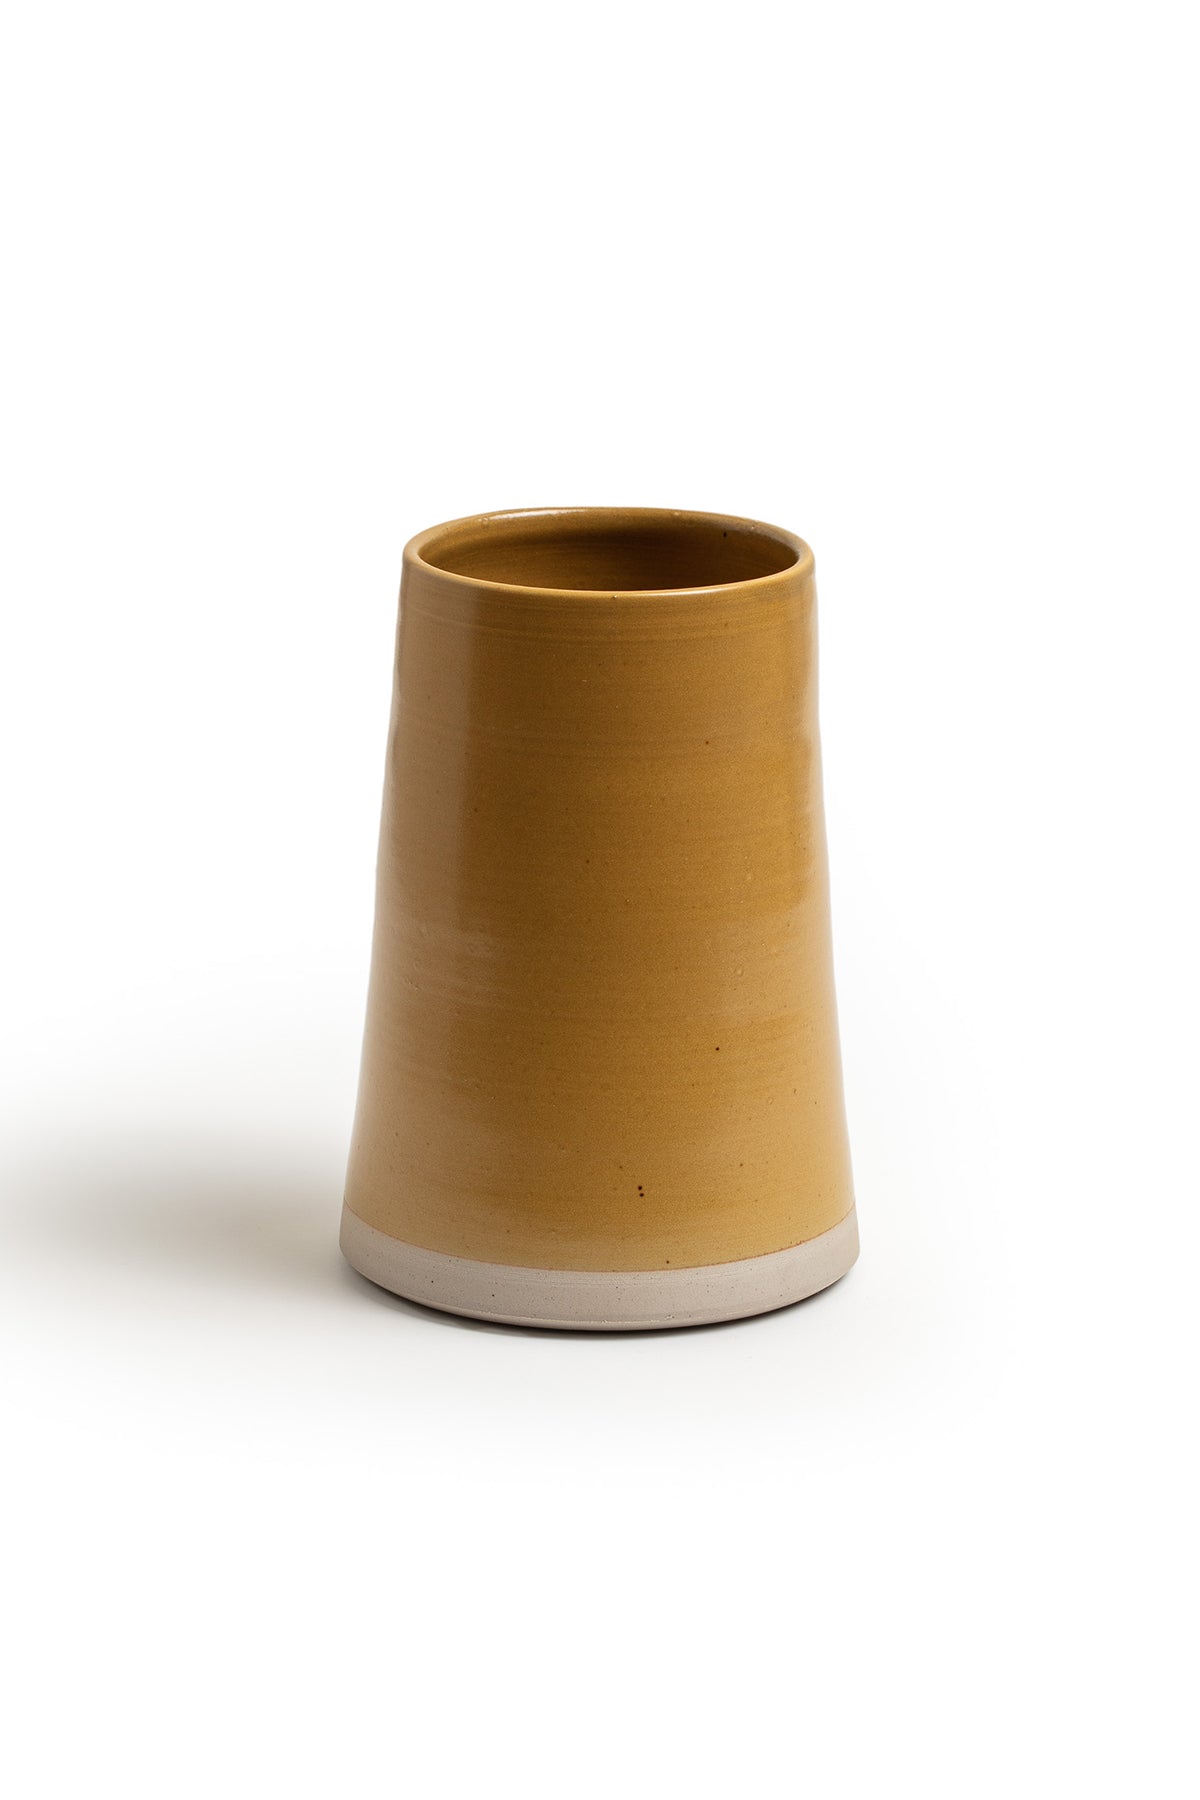 Jenny Graham Large Vase Mustard-20913160061121